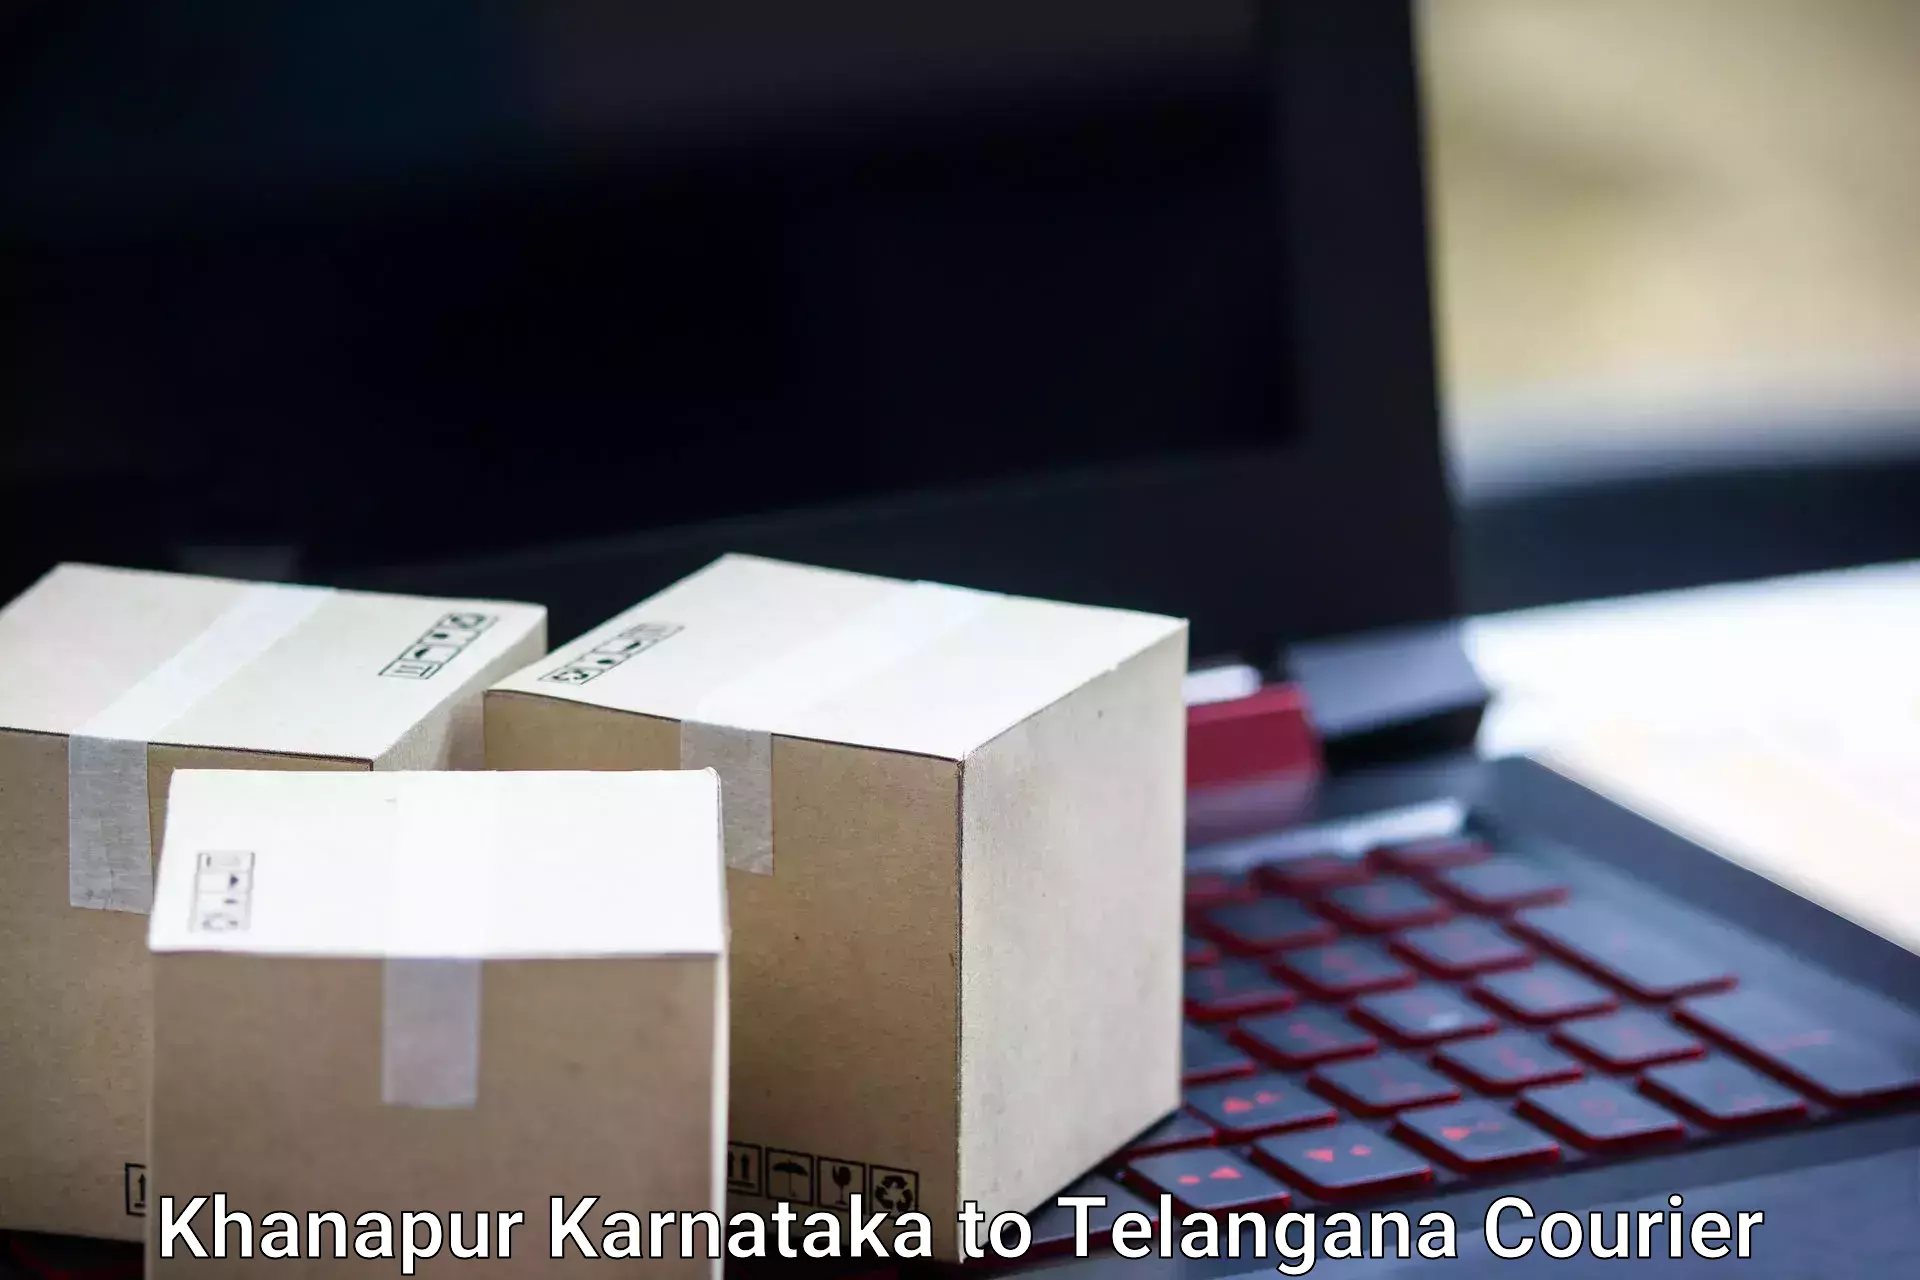 Baggage relocation service Khanapur Karnataka to Achampet